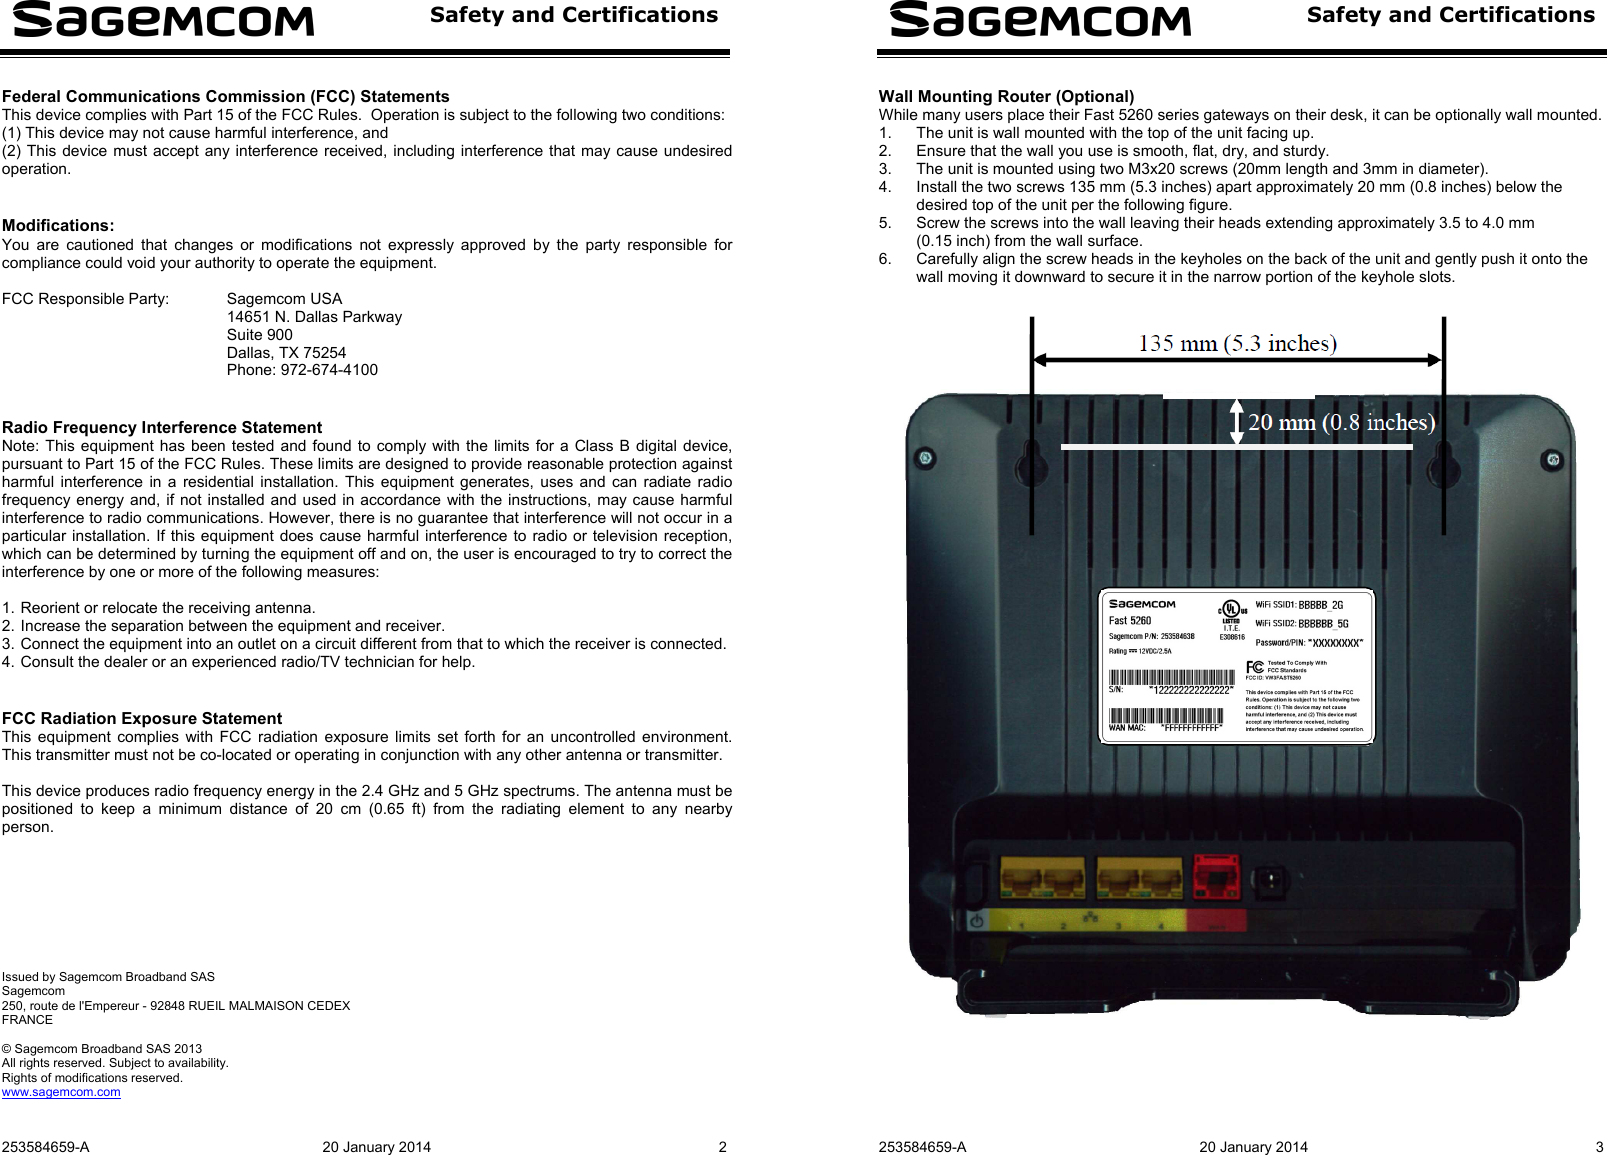 SAGEMCOM BROANDS FAST5260 FAST 5260 Home Router User Manual